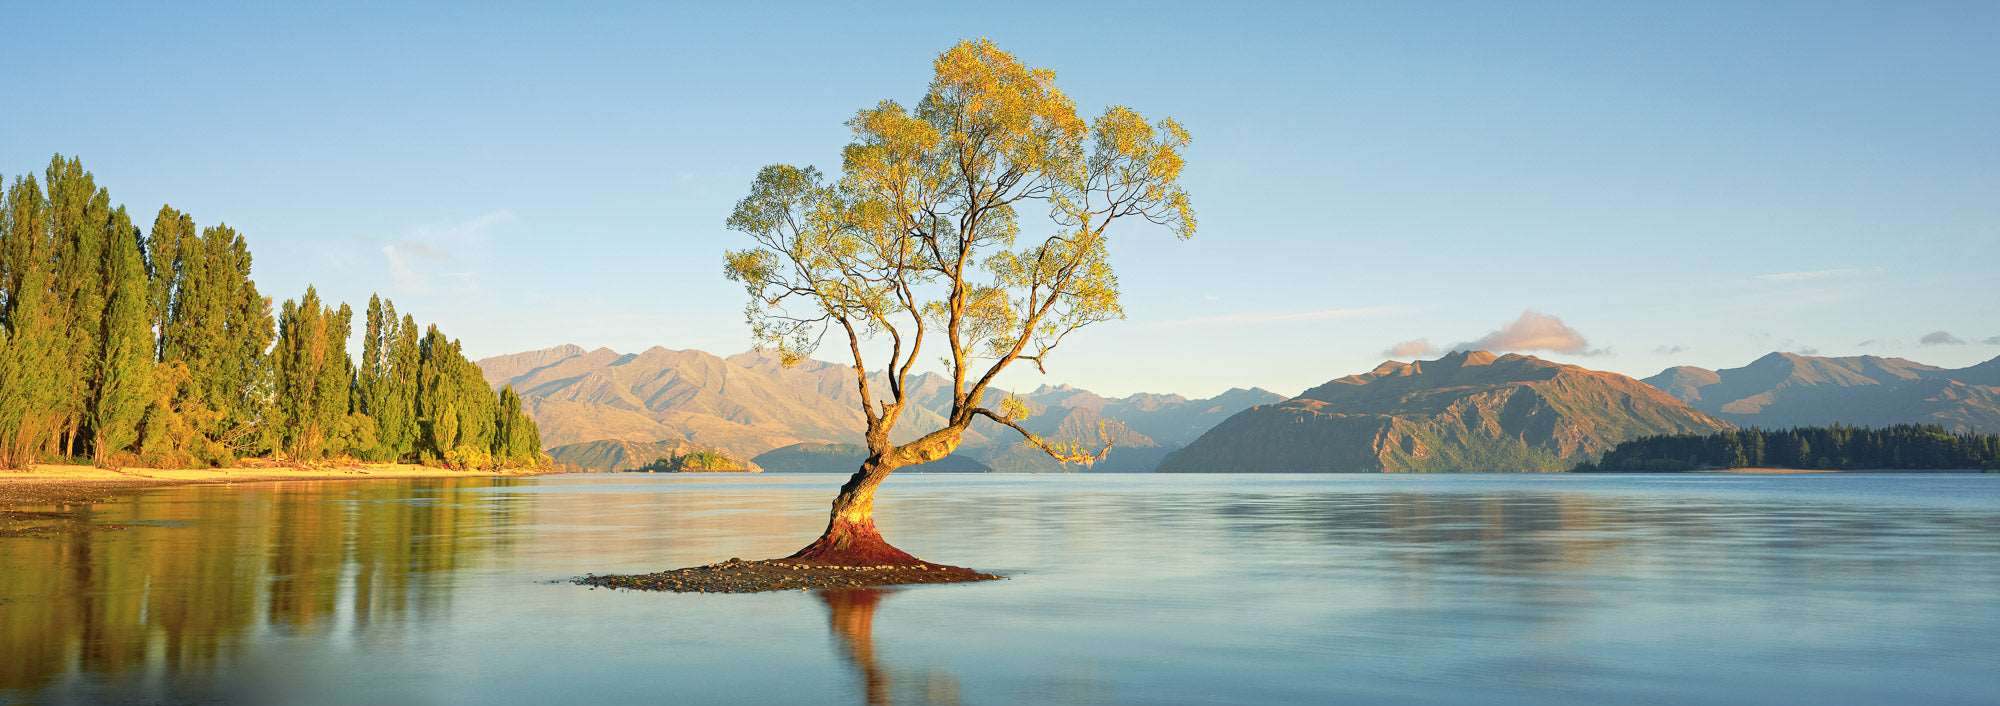 Solitude in Gold - Lake Wanaka - by Award Winning New Zealand Landscape Photographer Stephen Milner